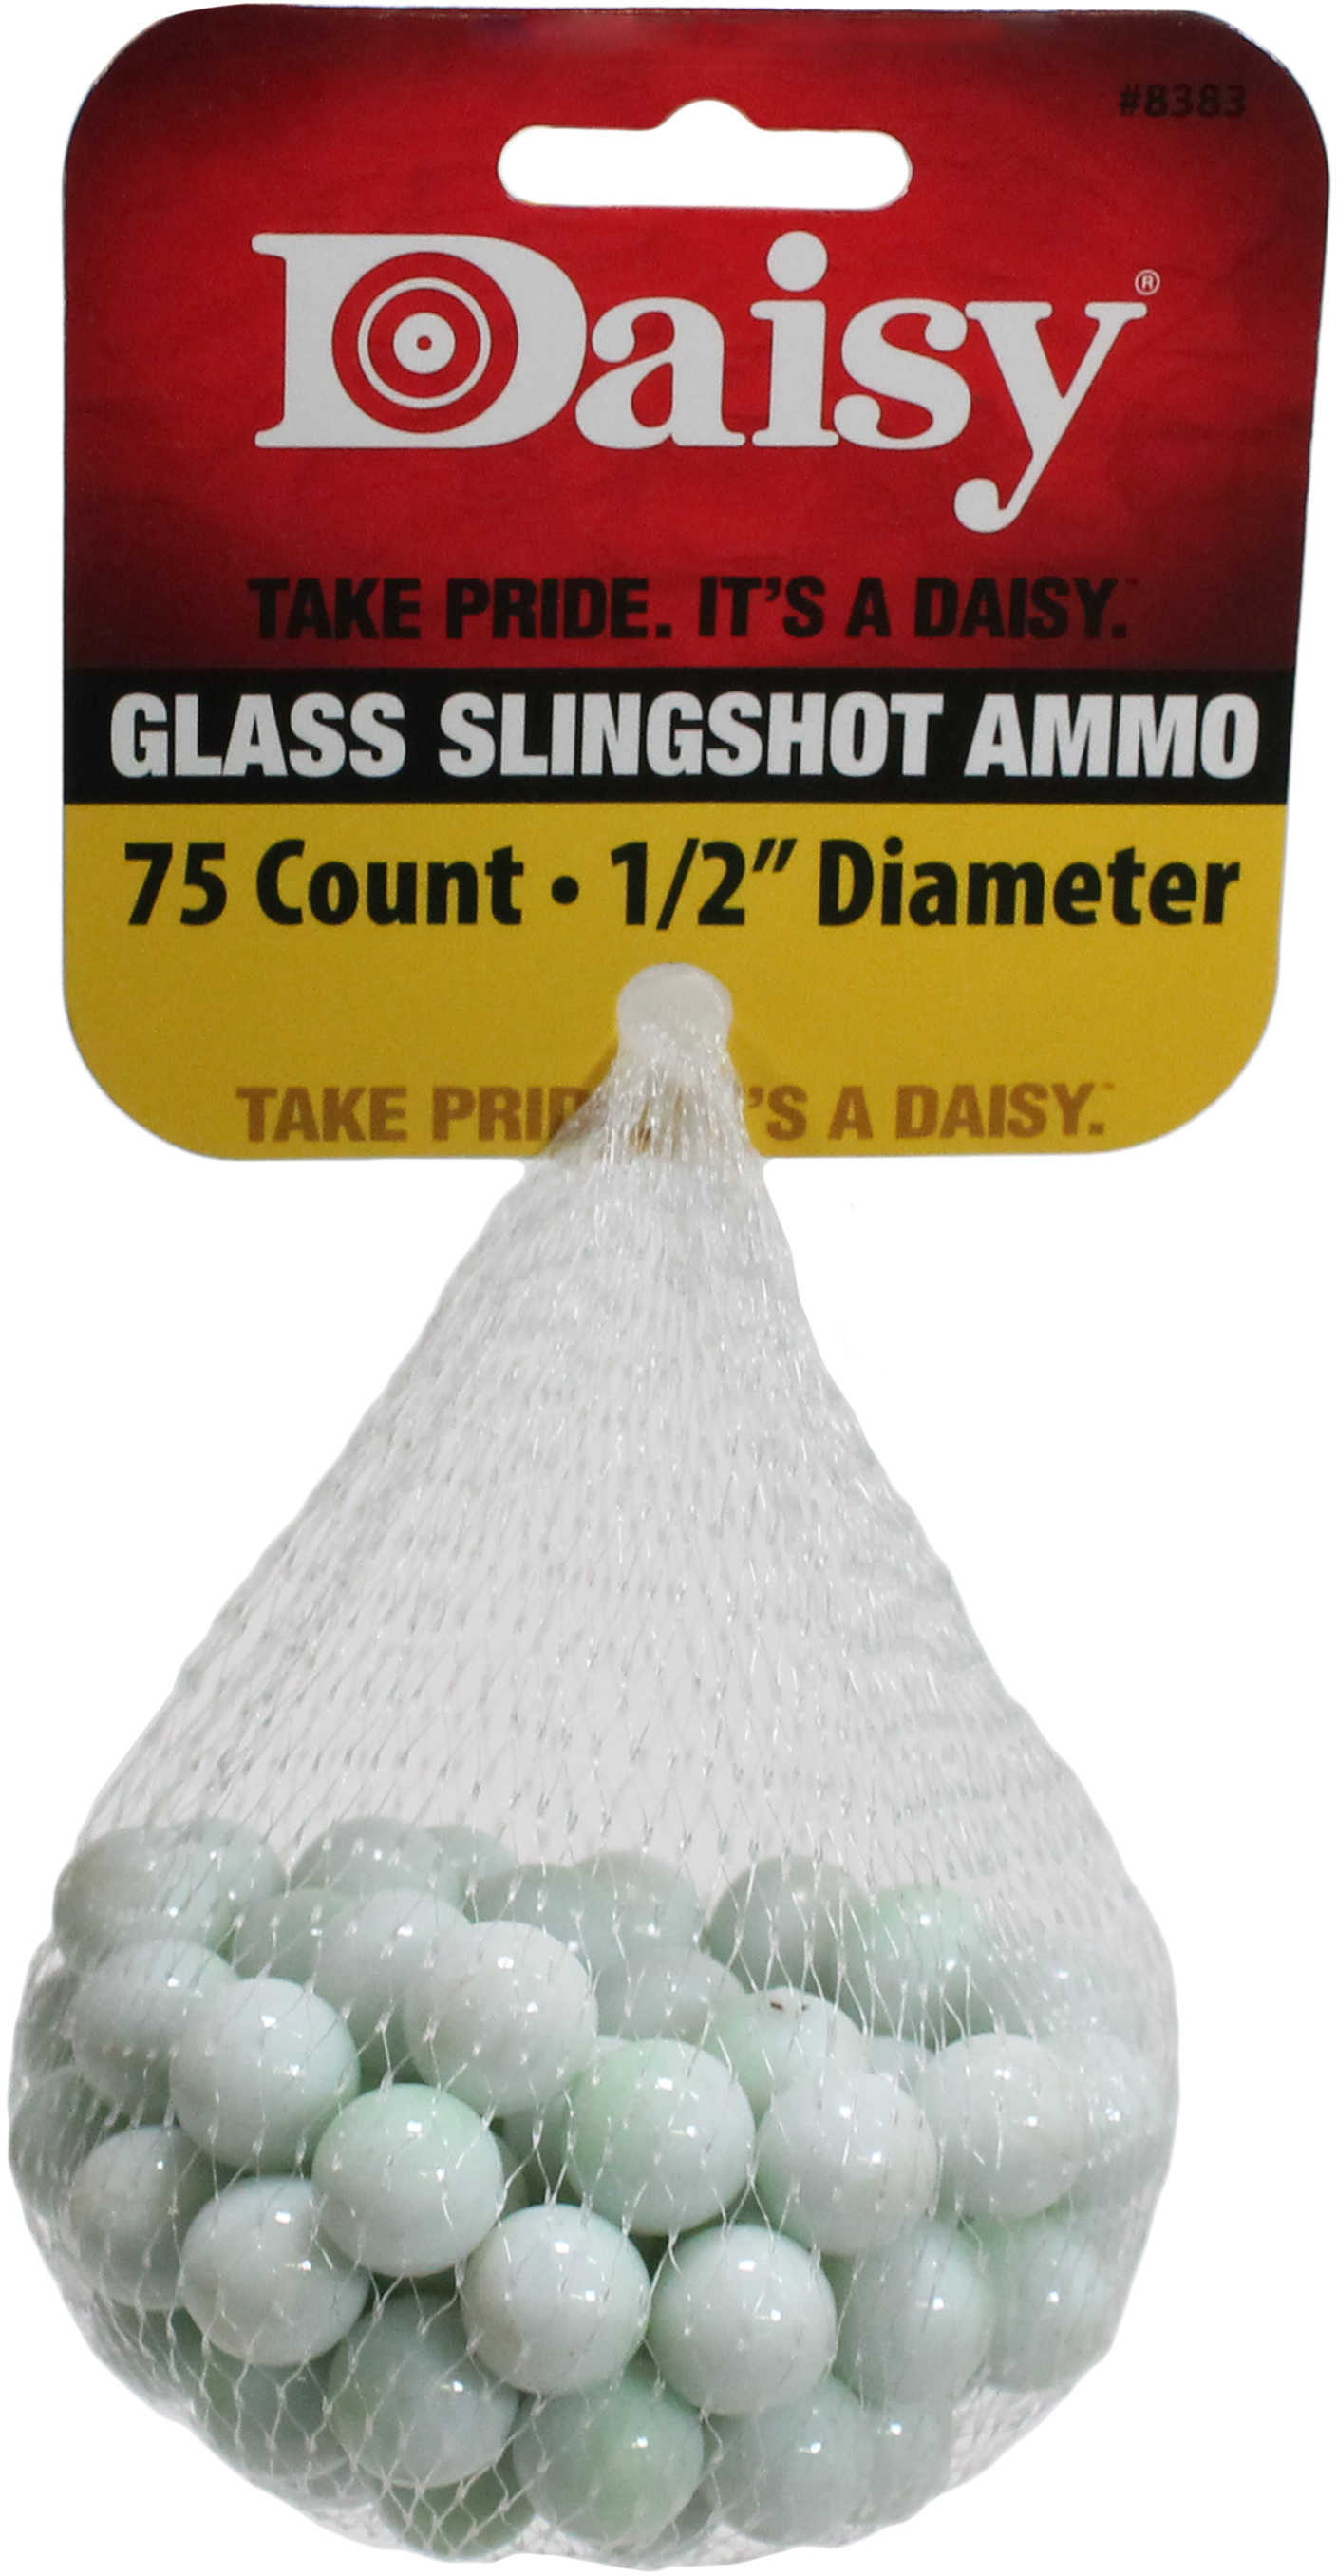 Daisy 1/2in. Slingshot Ammo Glass 75ct. Model: 8383